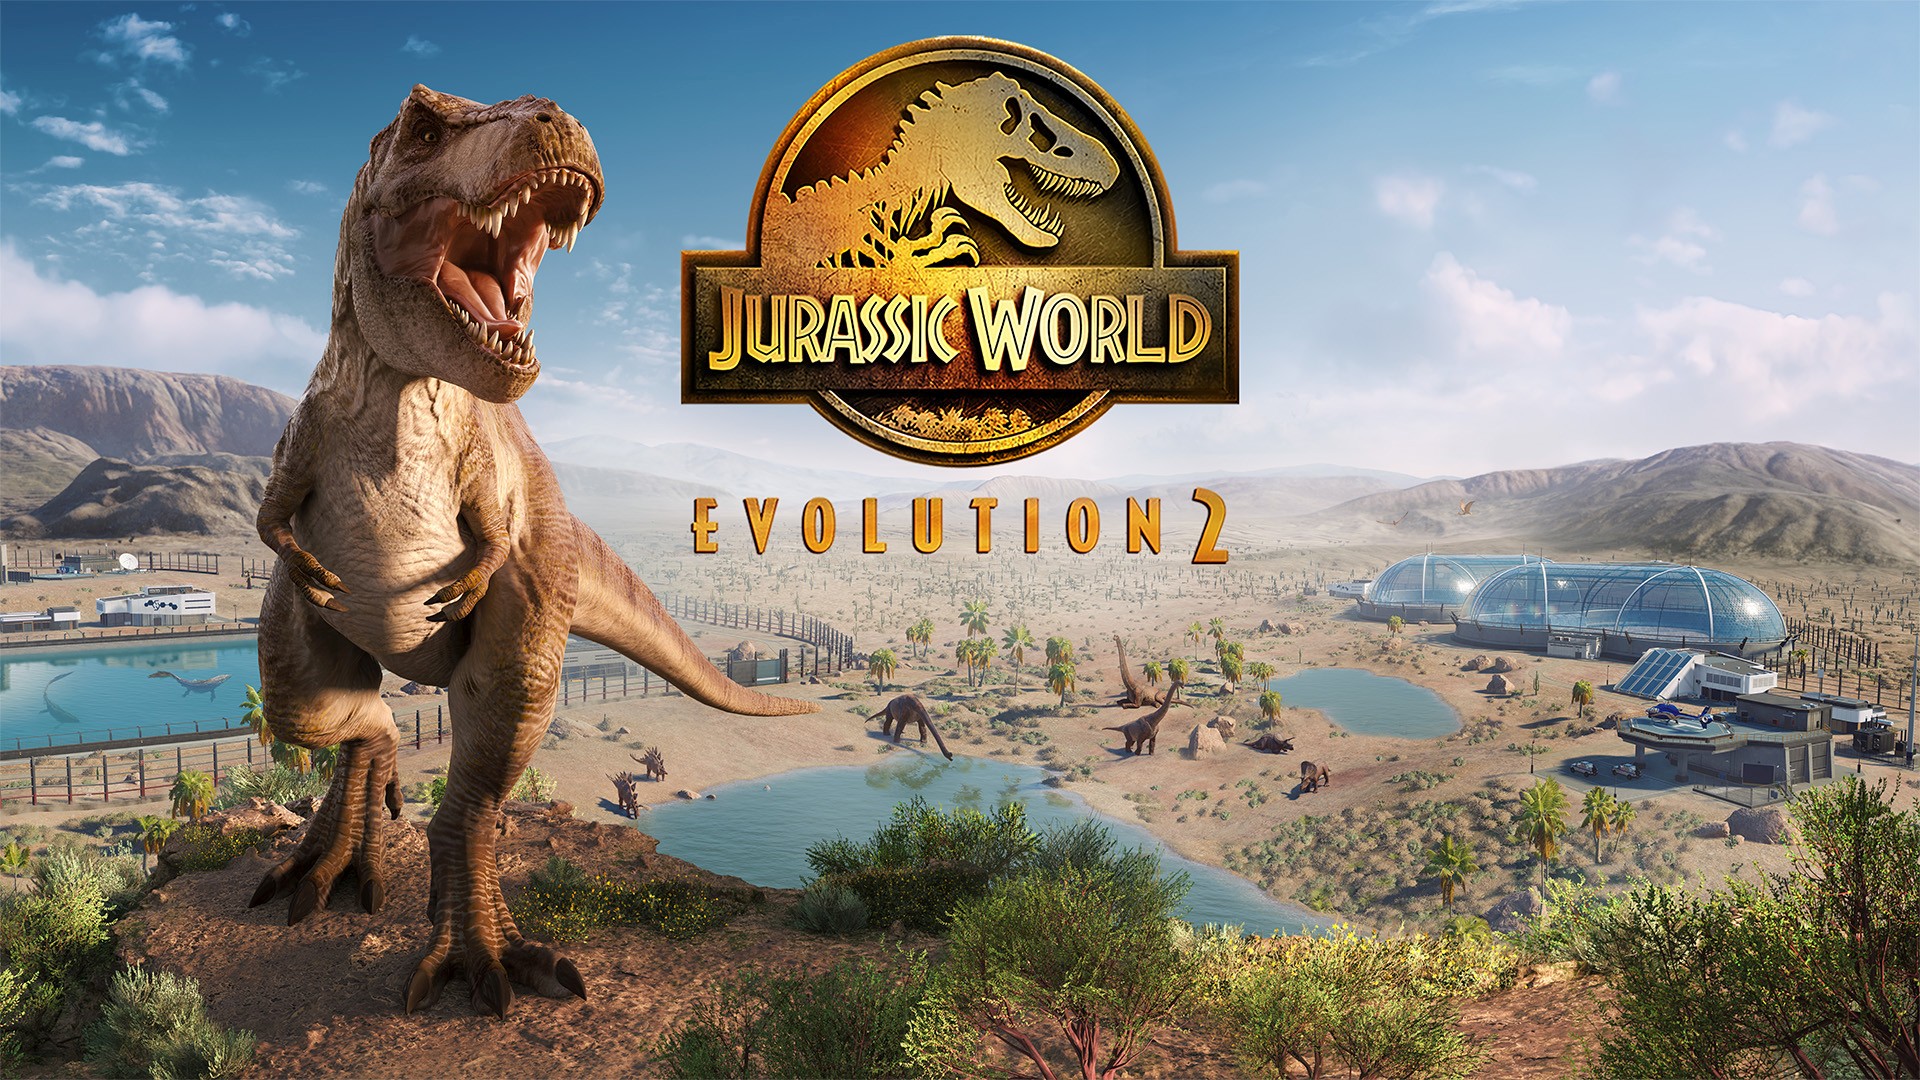 Jurassic world Evolution 2 Hero image